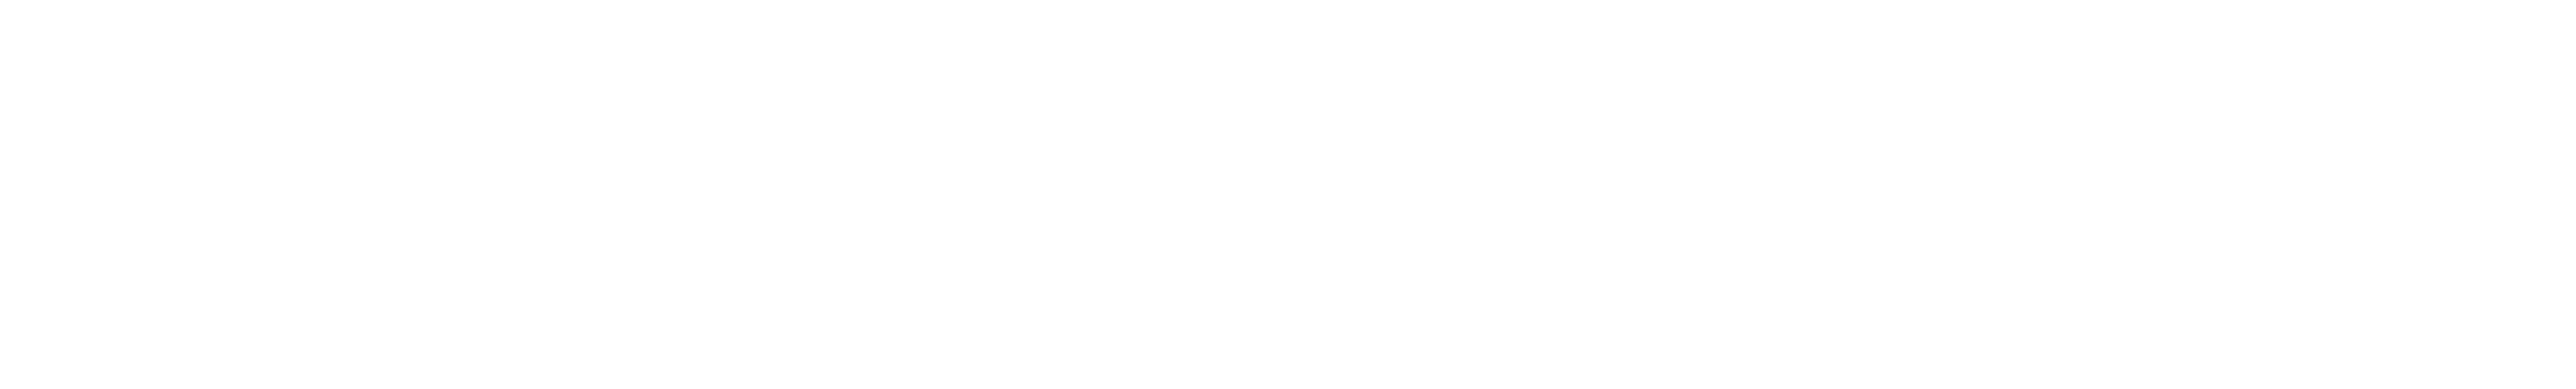 Indian Institute of Information Tehnology, Design and Manufacturing (IIITDM) Kancheepuram-logo